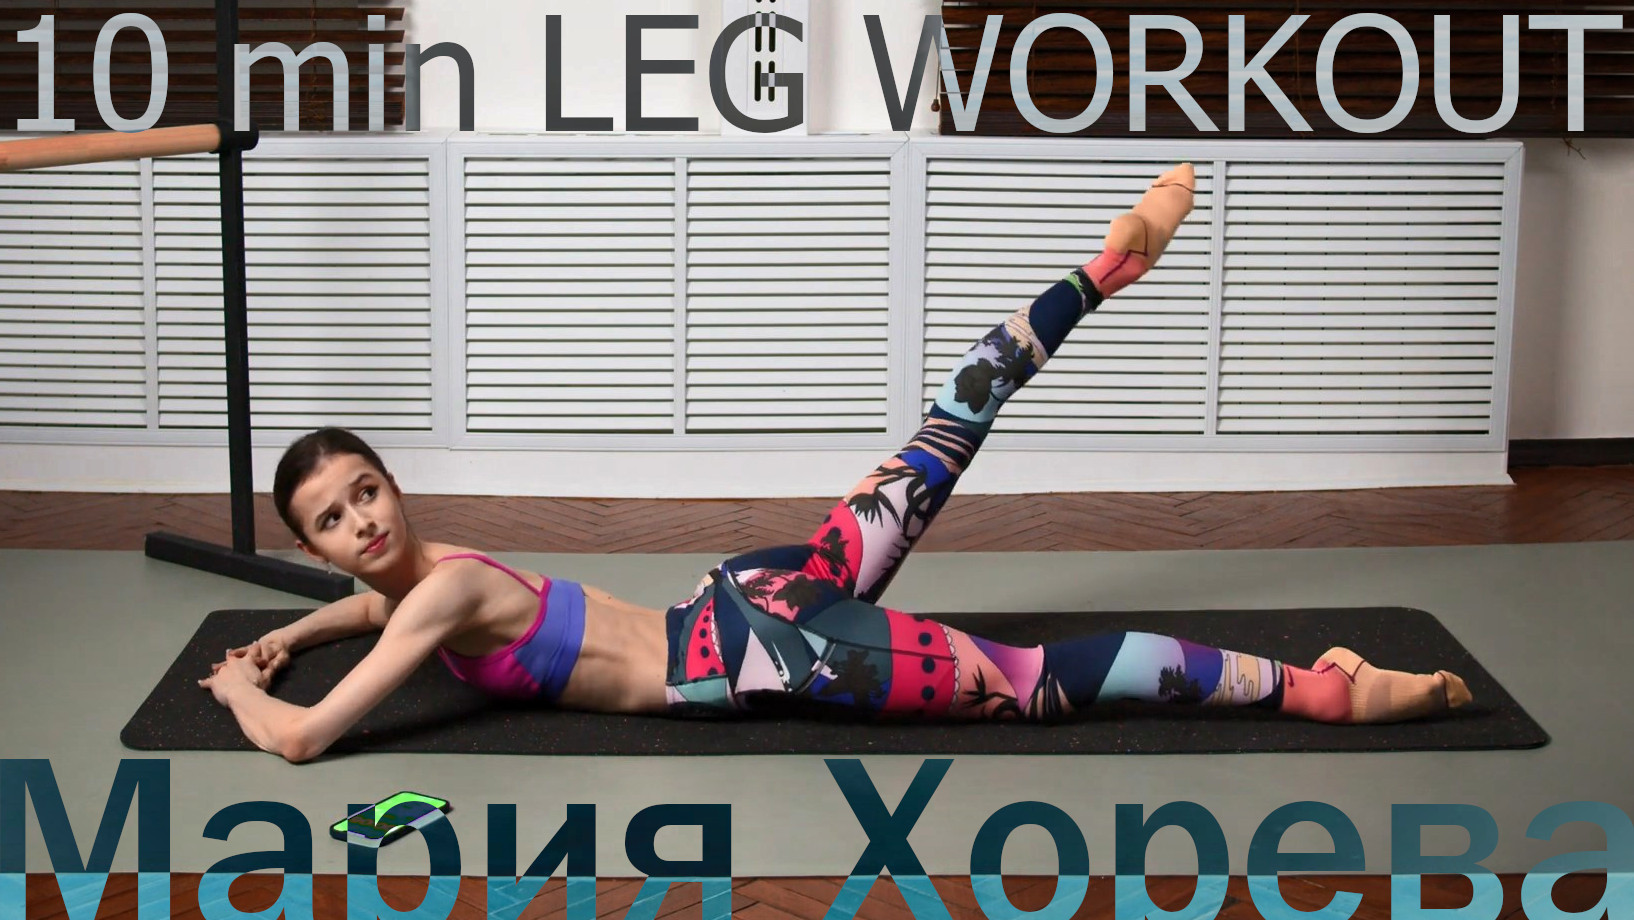 Maria Khoreva - 10 min Leg Workout